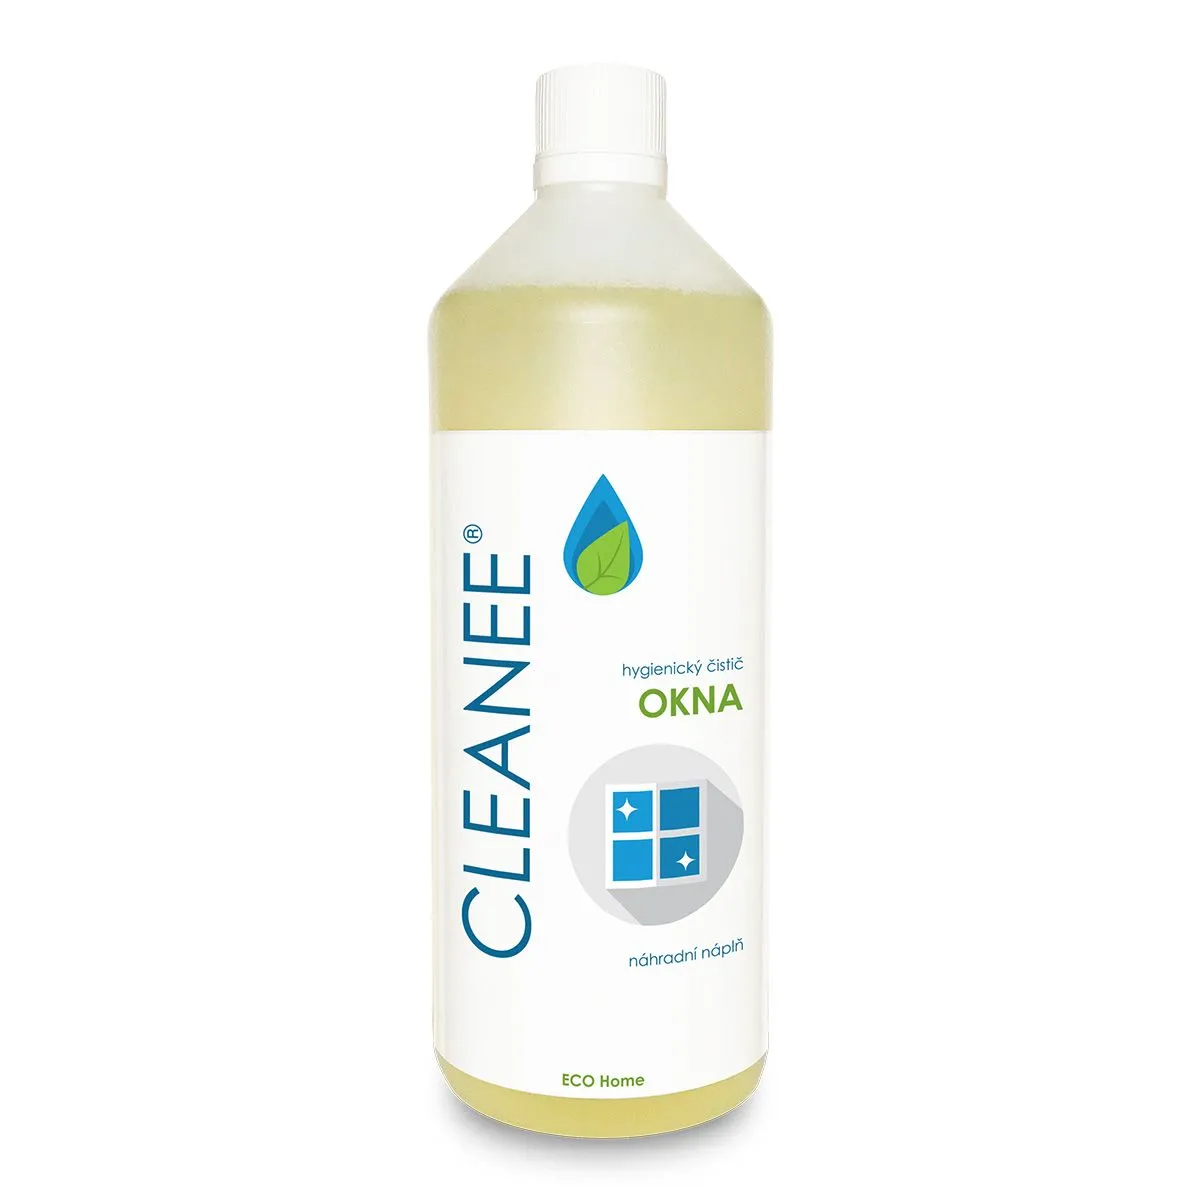 CLEANEE ECO Home Hygienický čistič OKNA náhradní náplň 1 l